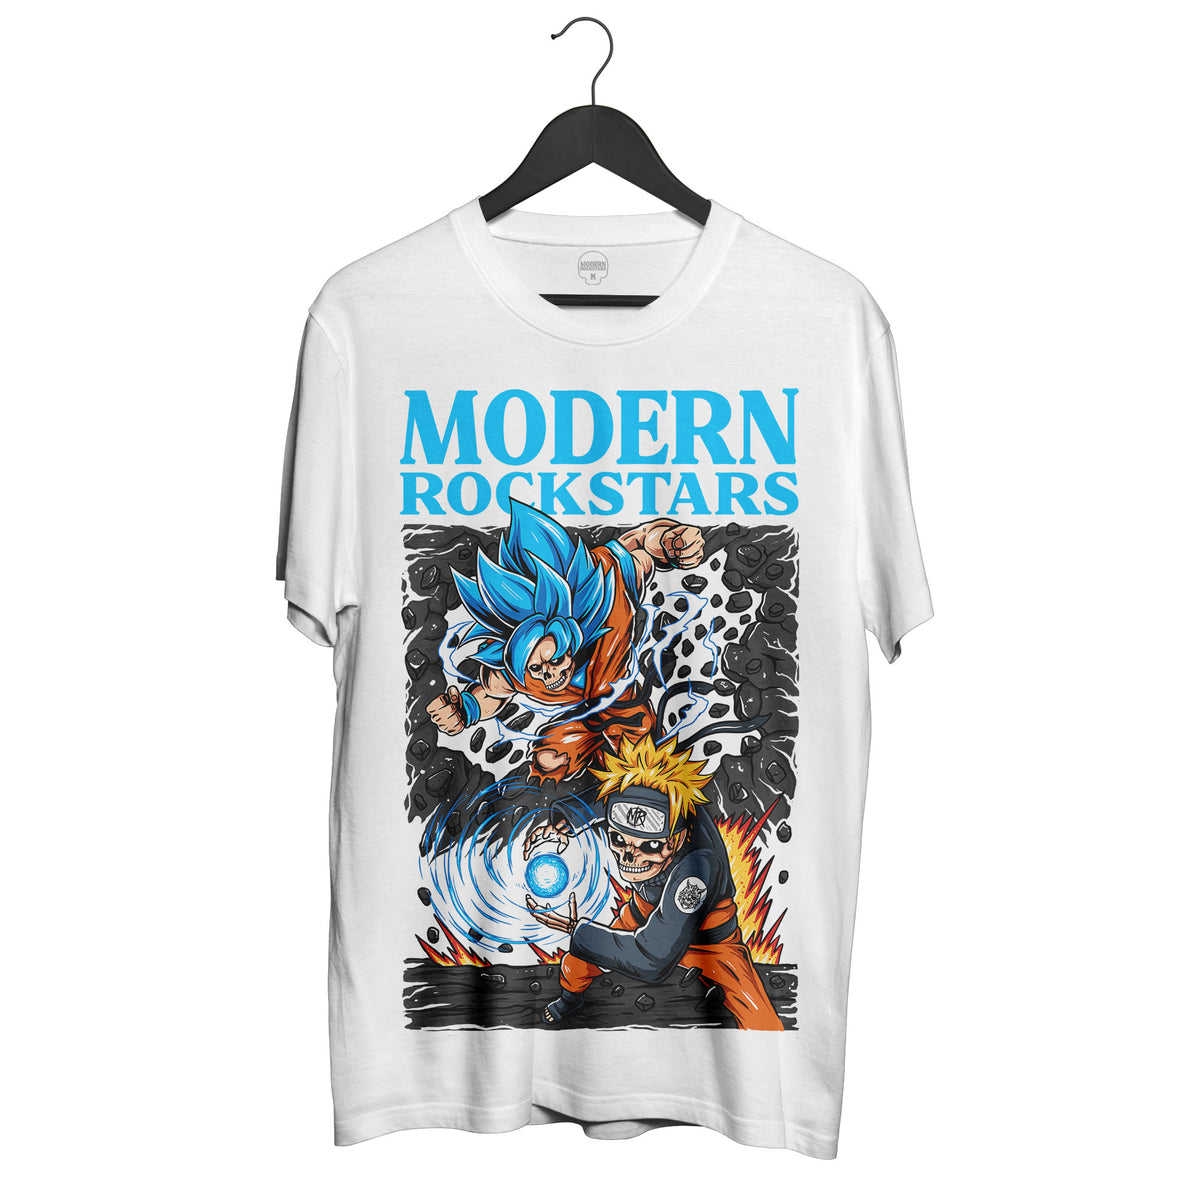 ANIME ROCKSTARS T-shirt - Modern Rockstars